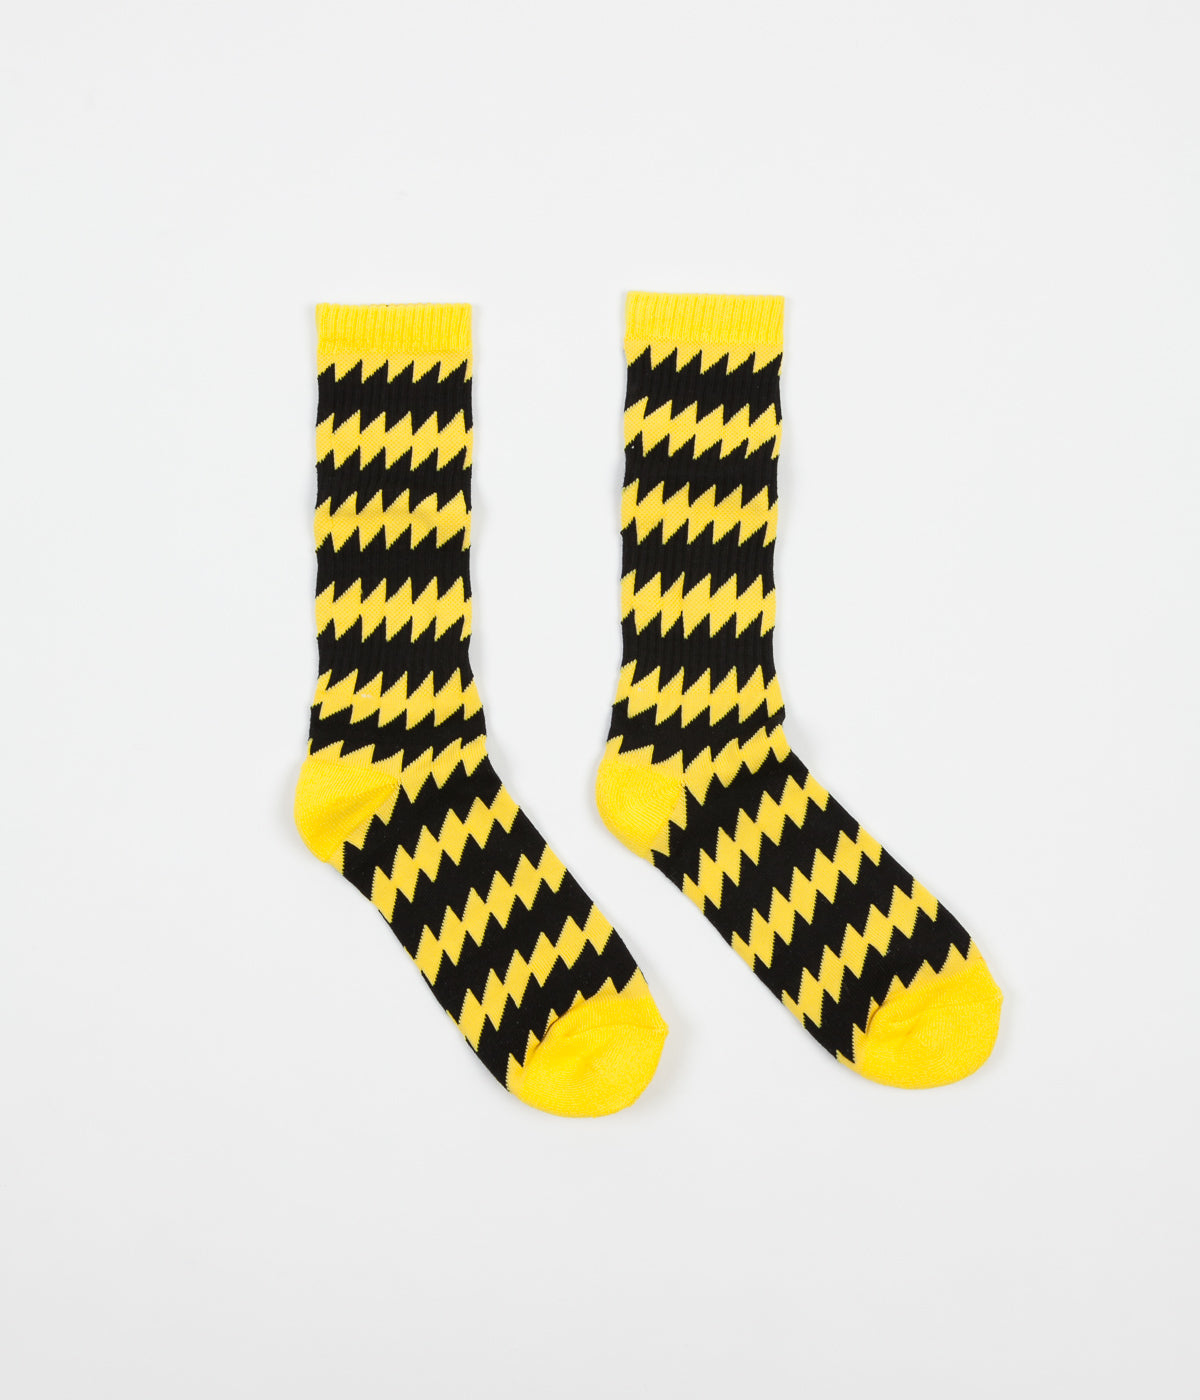 Chrystie Nyc X Chinatown Soccer Club Socks Black Yellow Flatspot